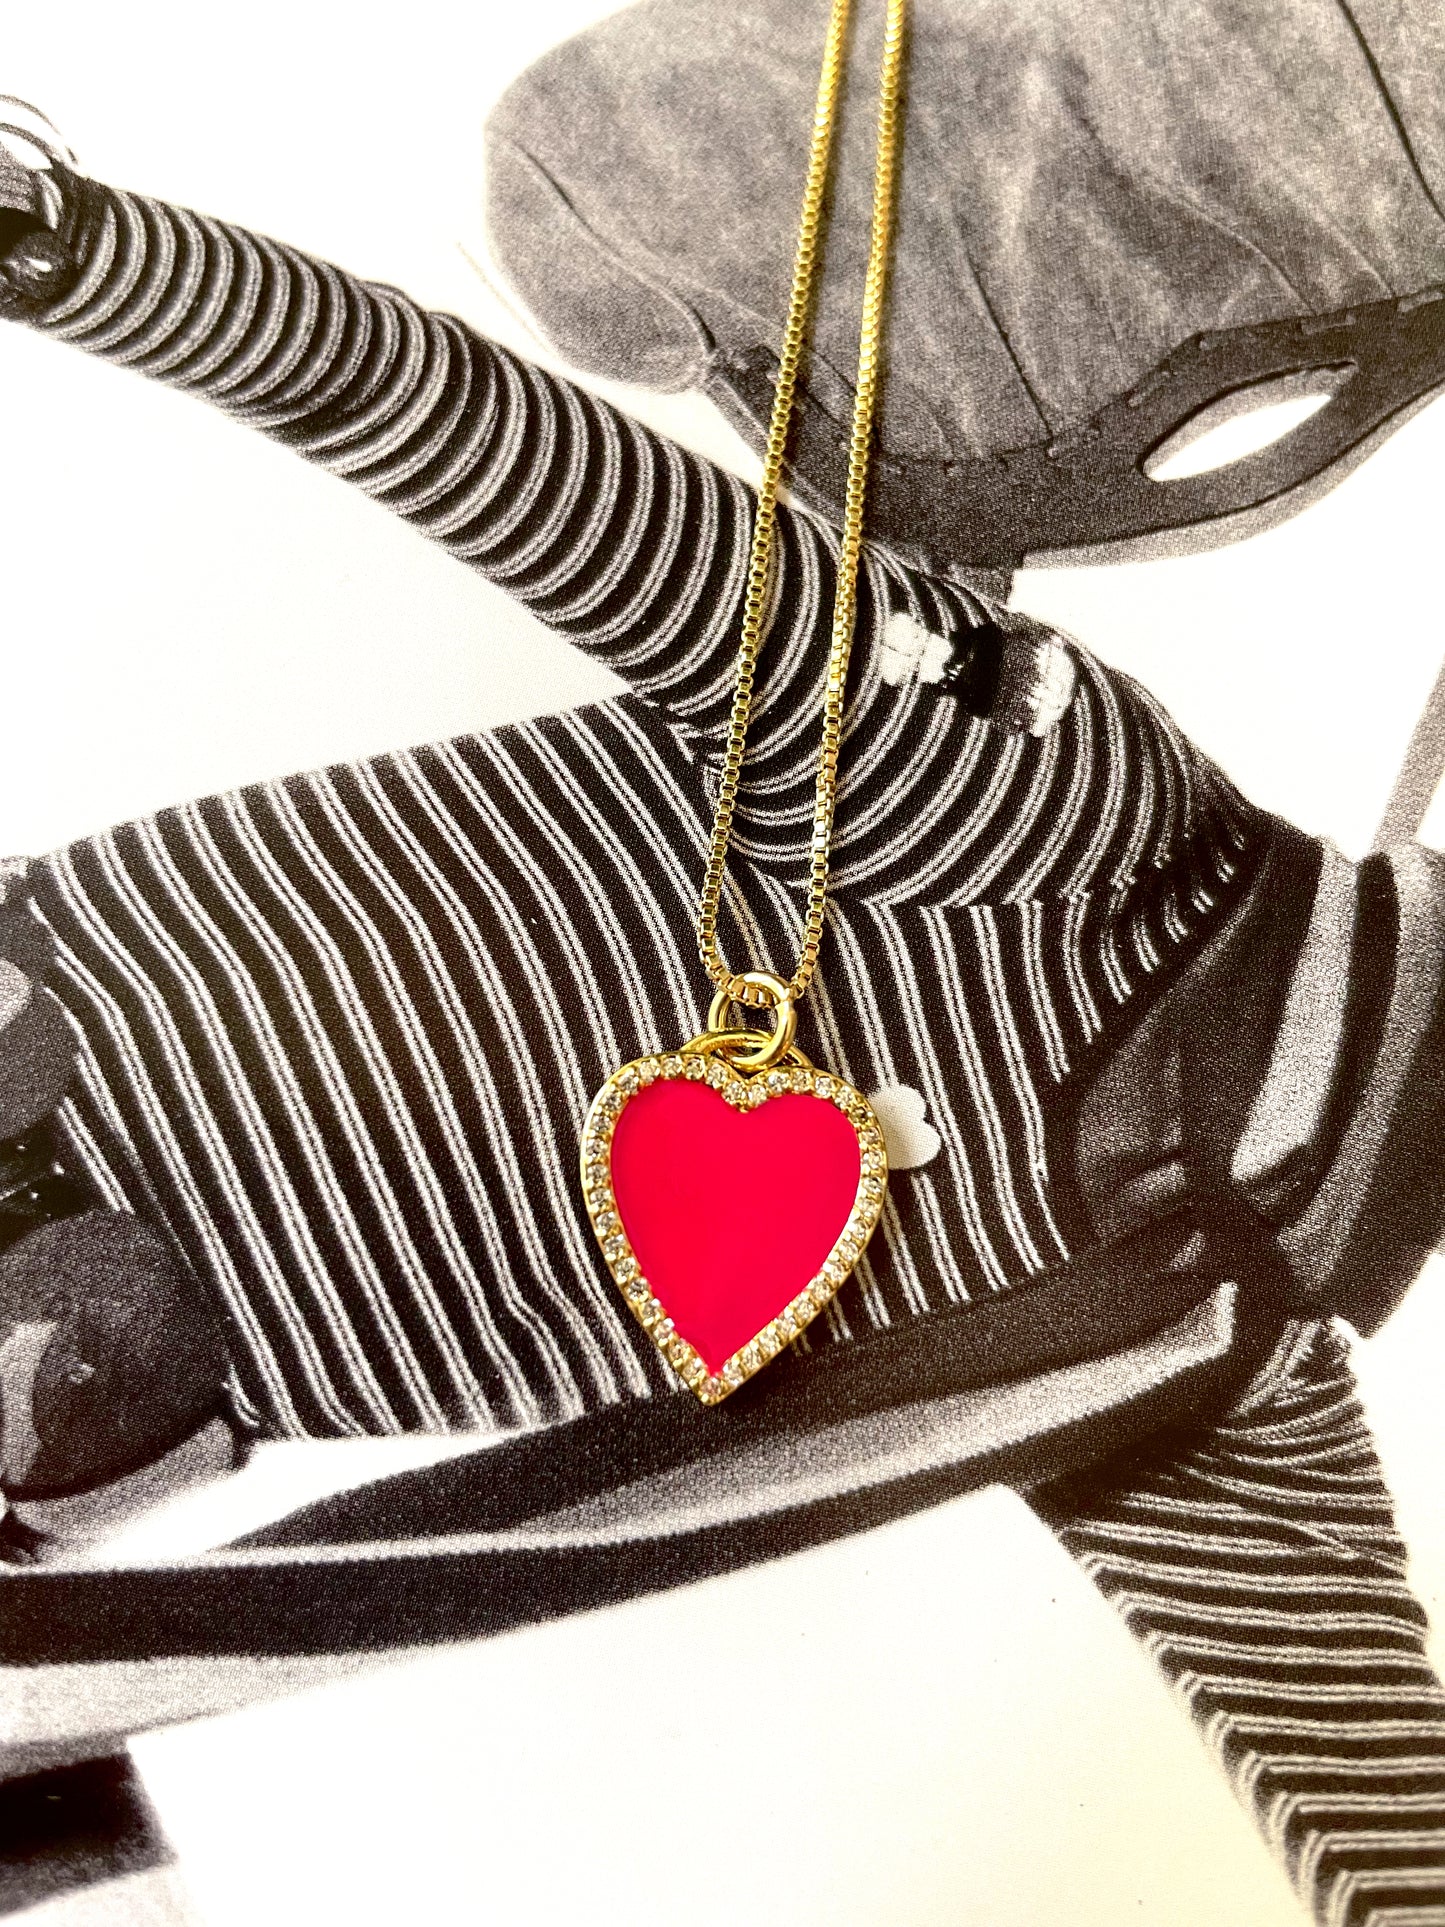 Mini pave stone heart pendant necklace